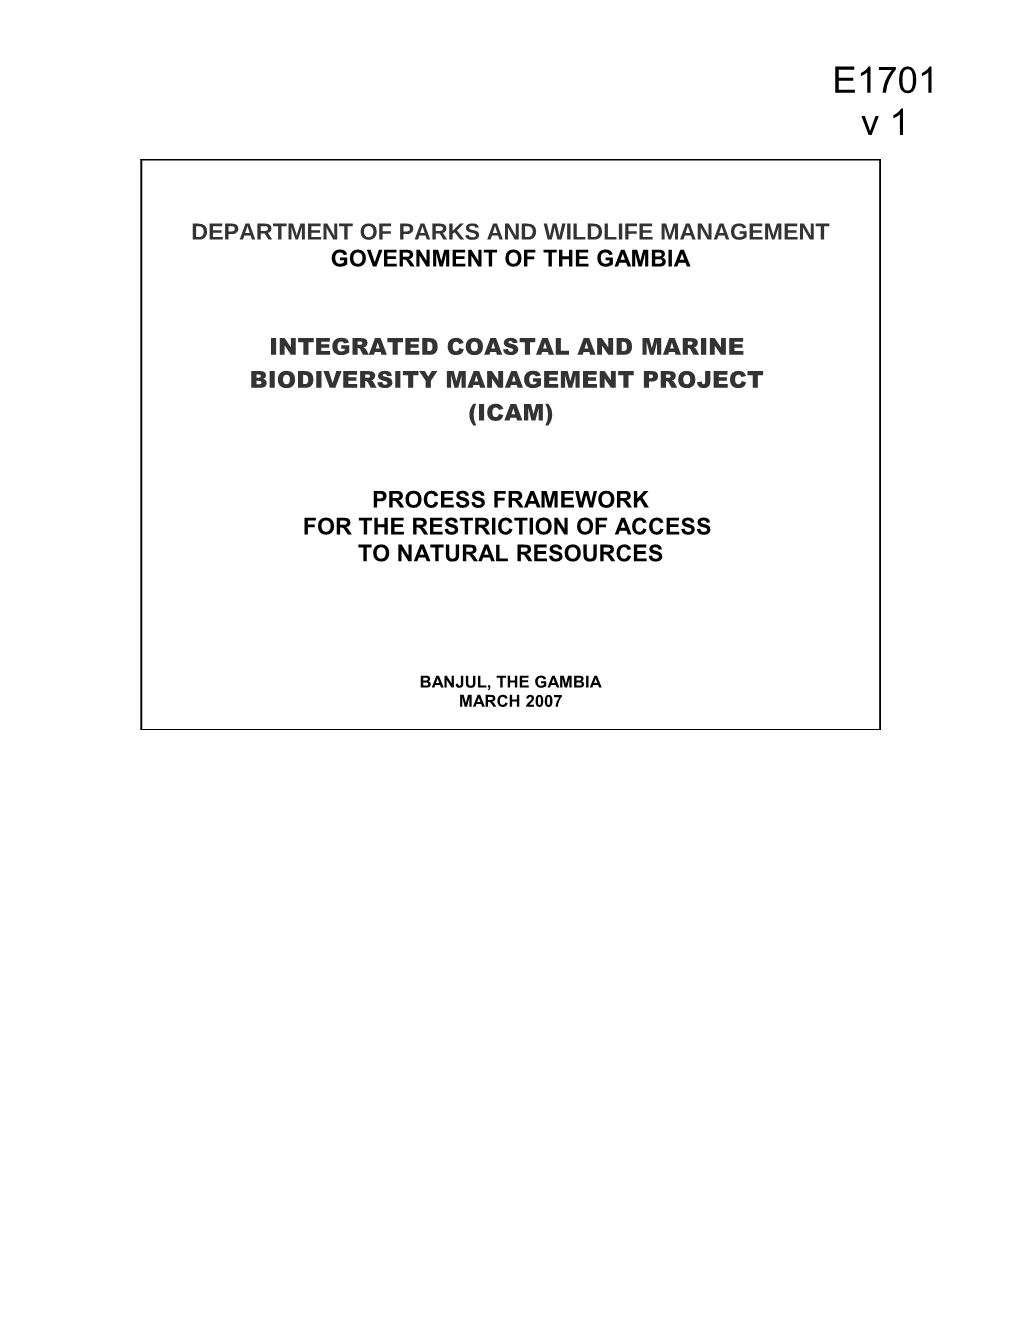 Integrated Coastal and Marine Biodiversity Management Project